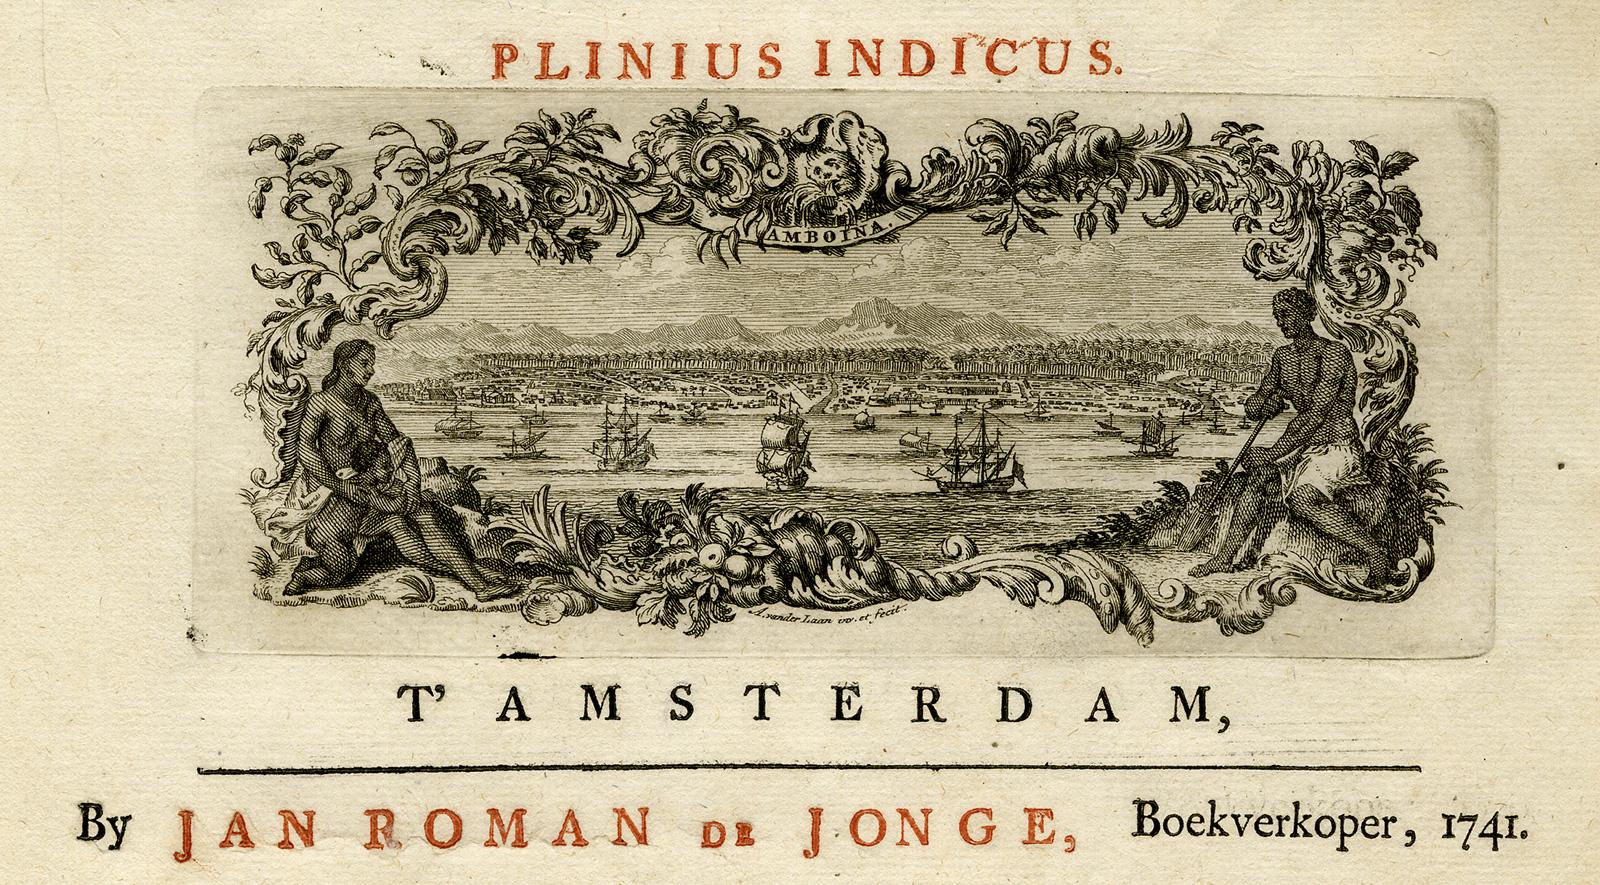 Jorg Eberhardt Rumph Print - Title page - Ambonian Cabinet of Curiosities by Rumphius - Engraving - 18th c.